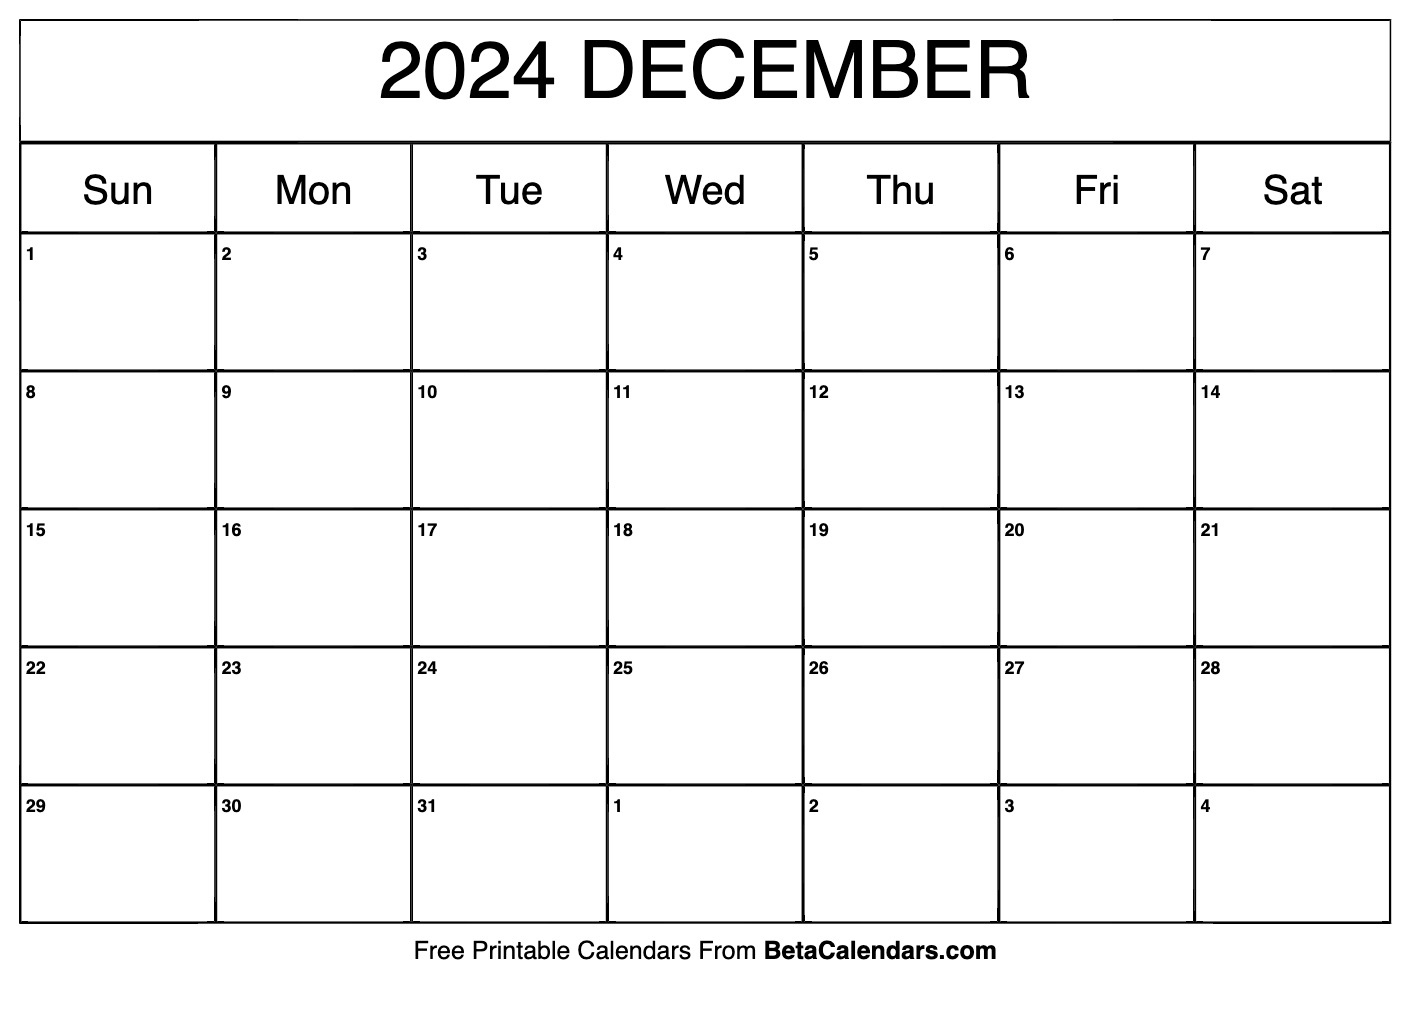 Free Printable December 2024 Calendar | Free Printable Calendar December 2024